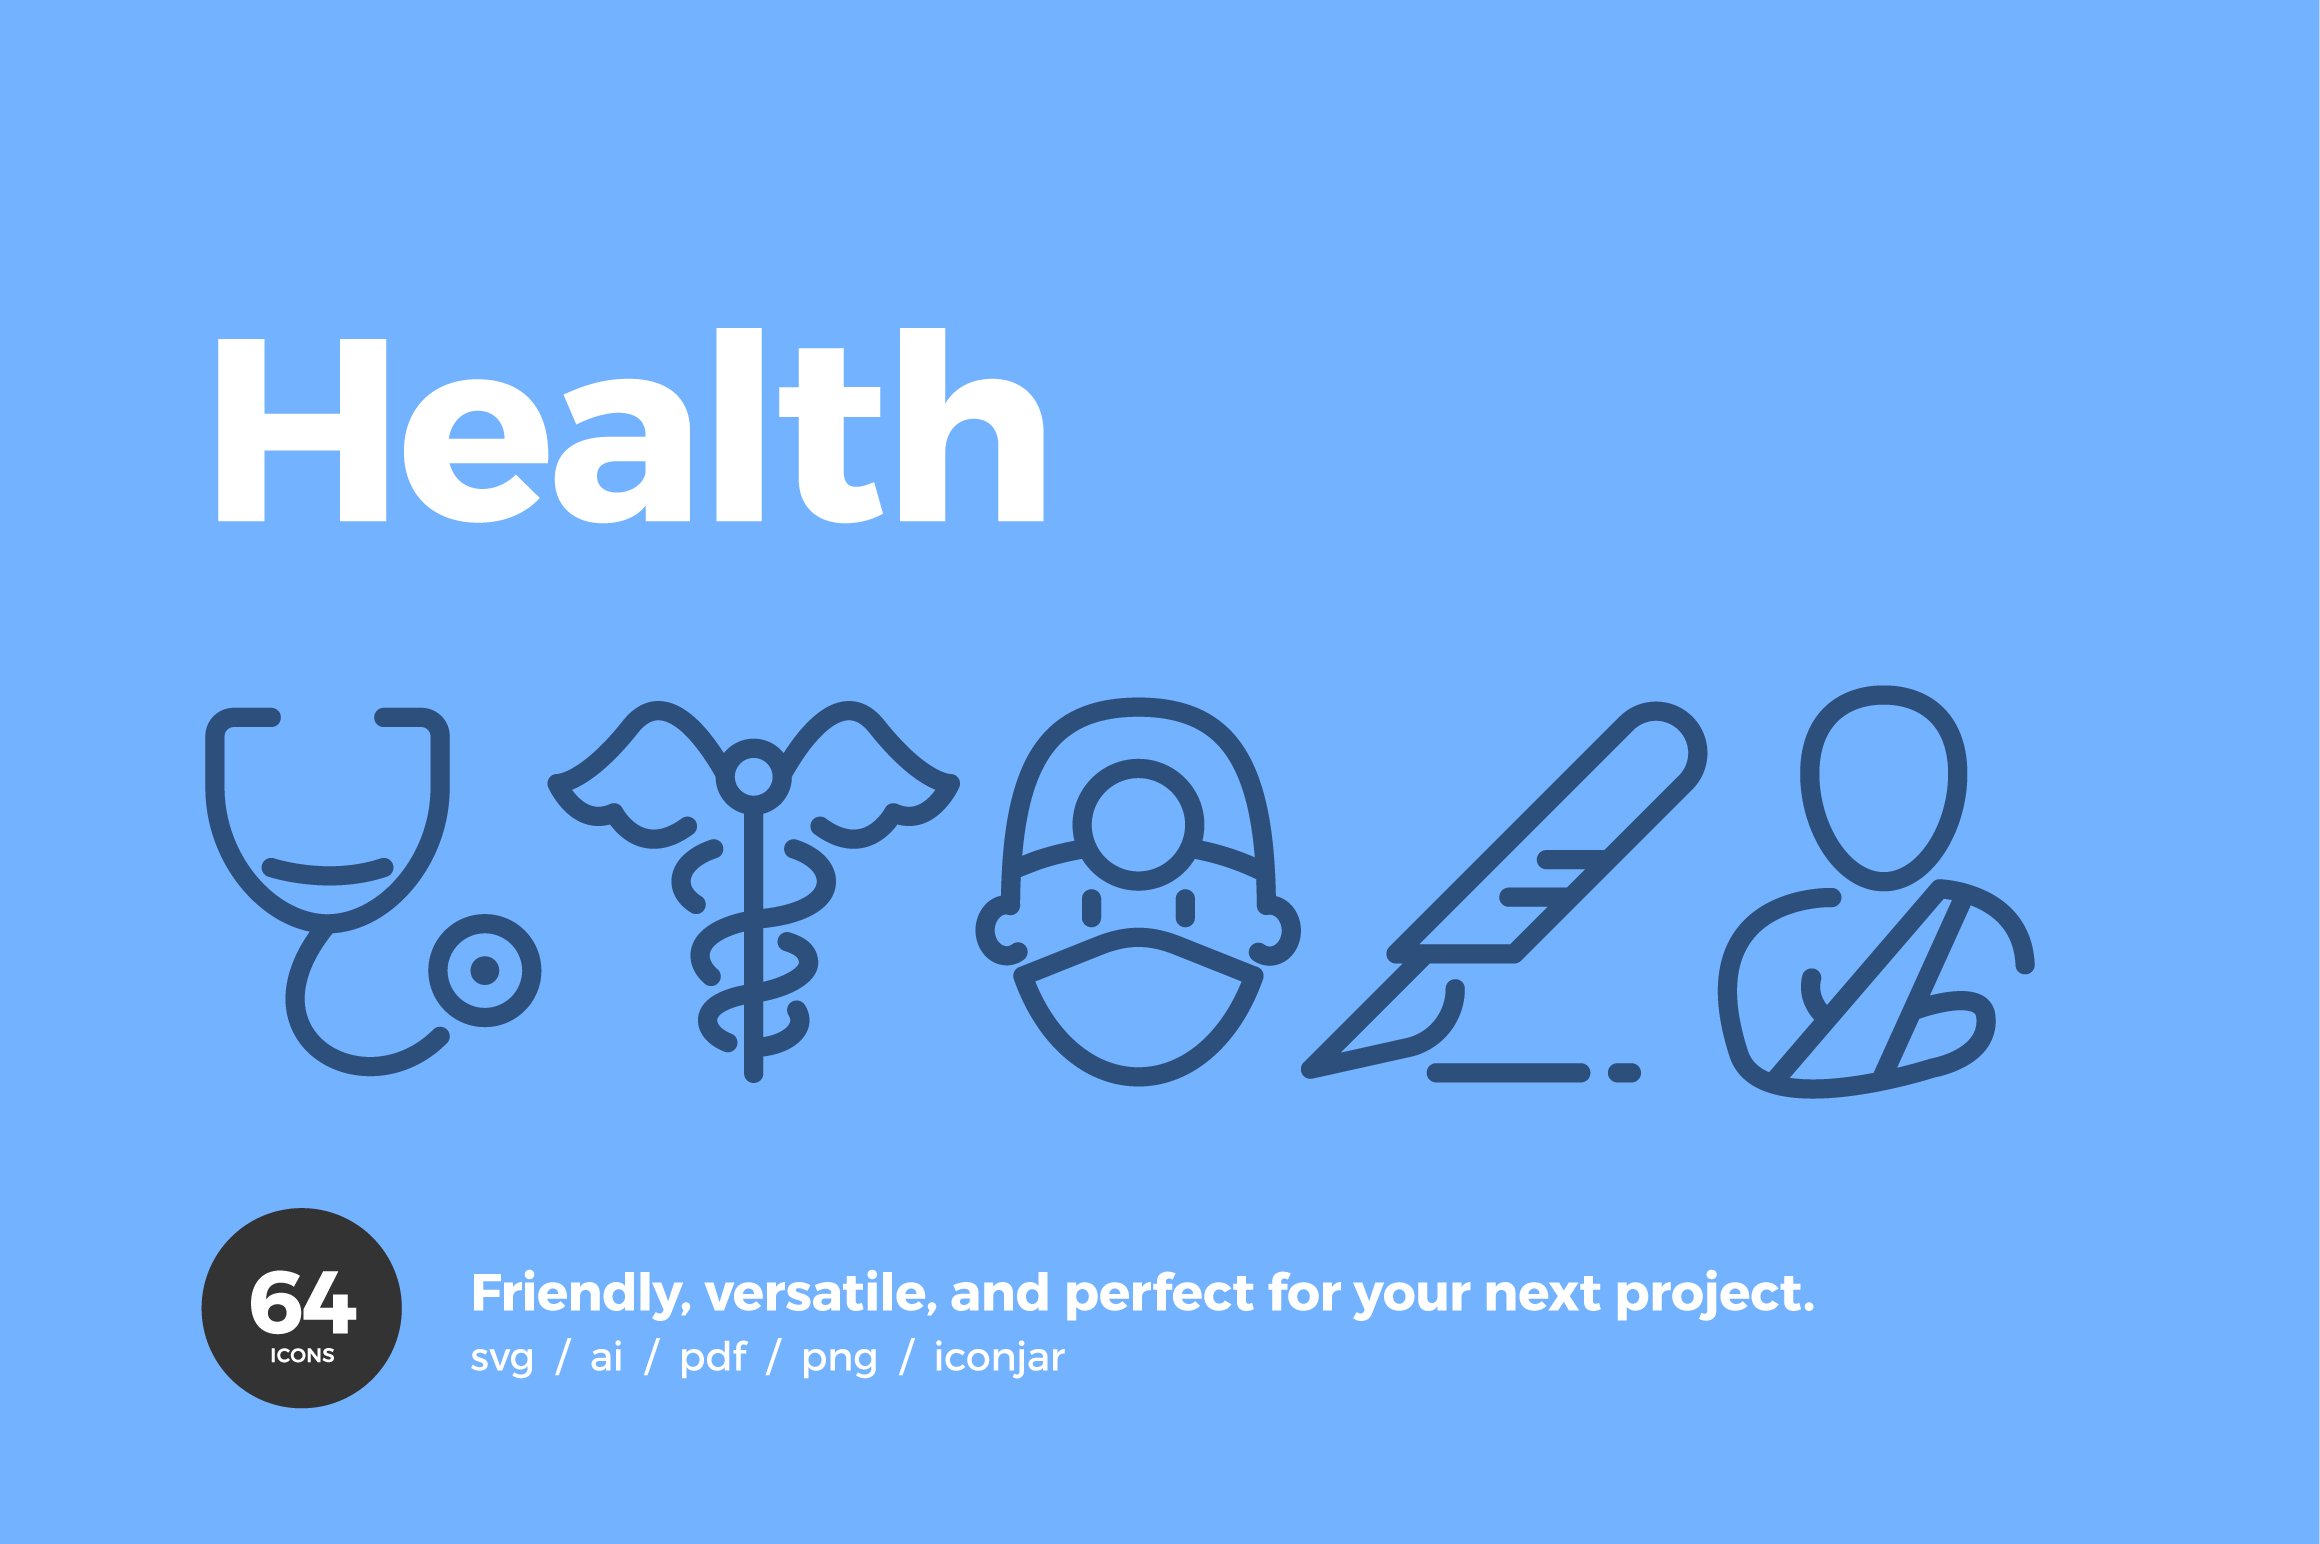 Health Icons — Pixi Line cover image.